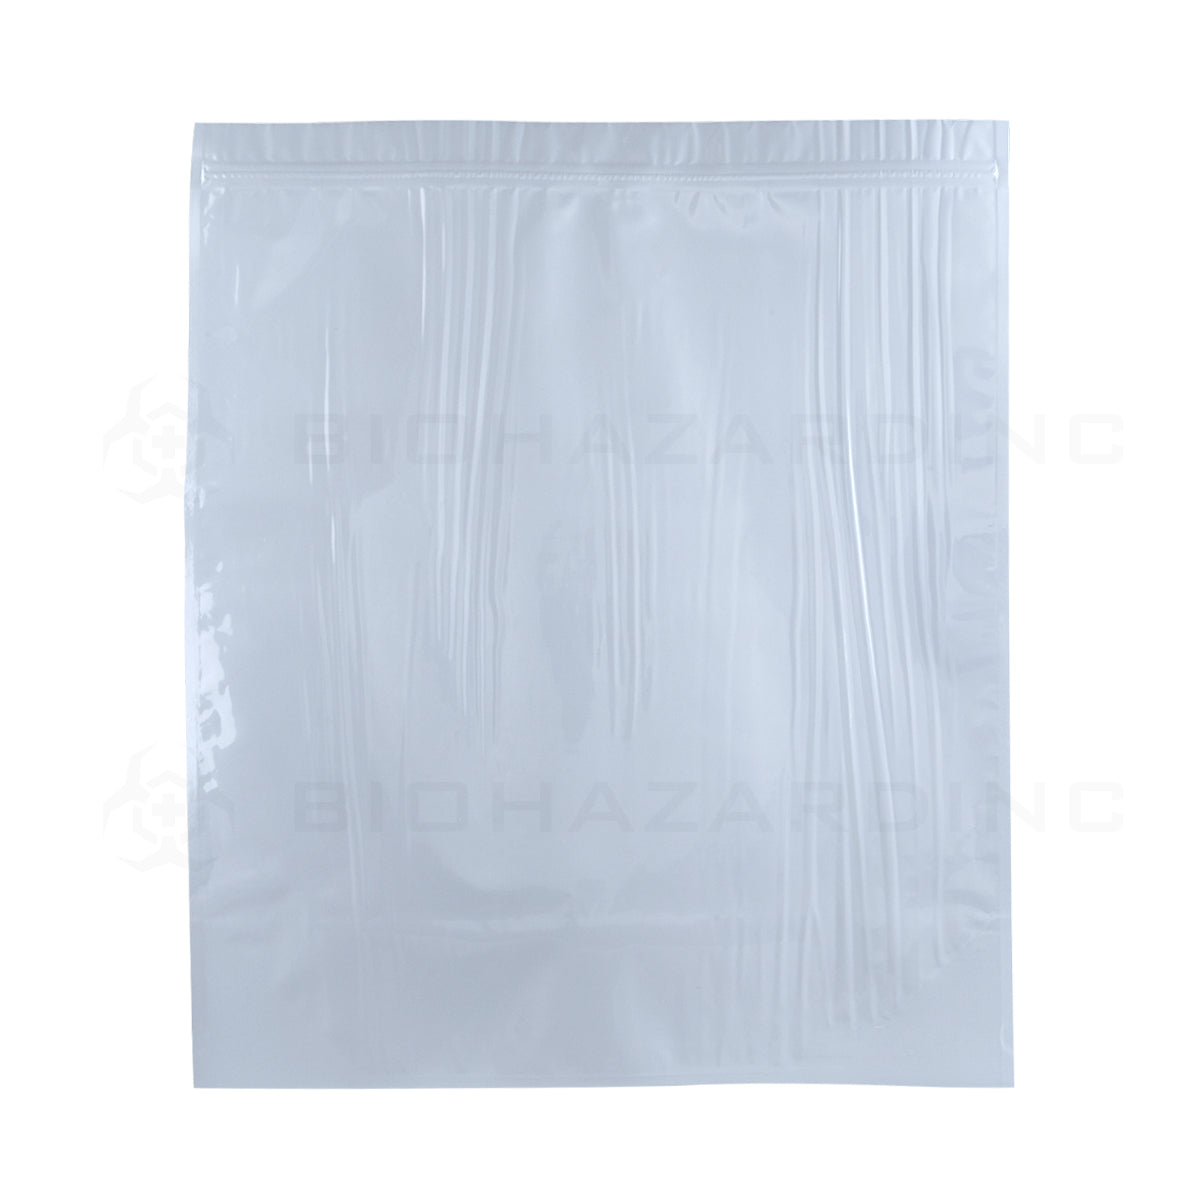 Tamper Evident | Glossy White Mylar Bags - Various Sizes Mylar Bag Biohazard Inc 12"x9" - 1lb - 100 Count - Tear Notch  